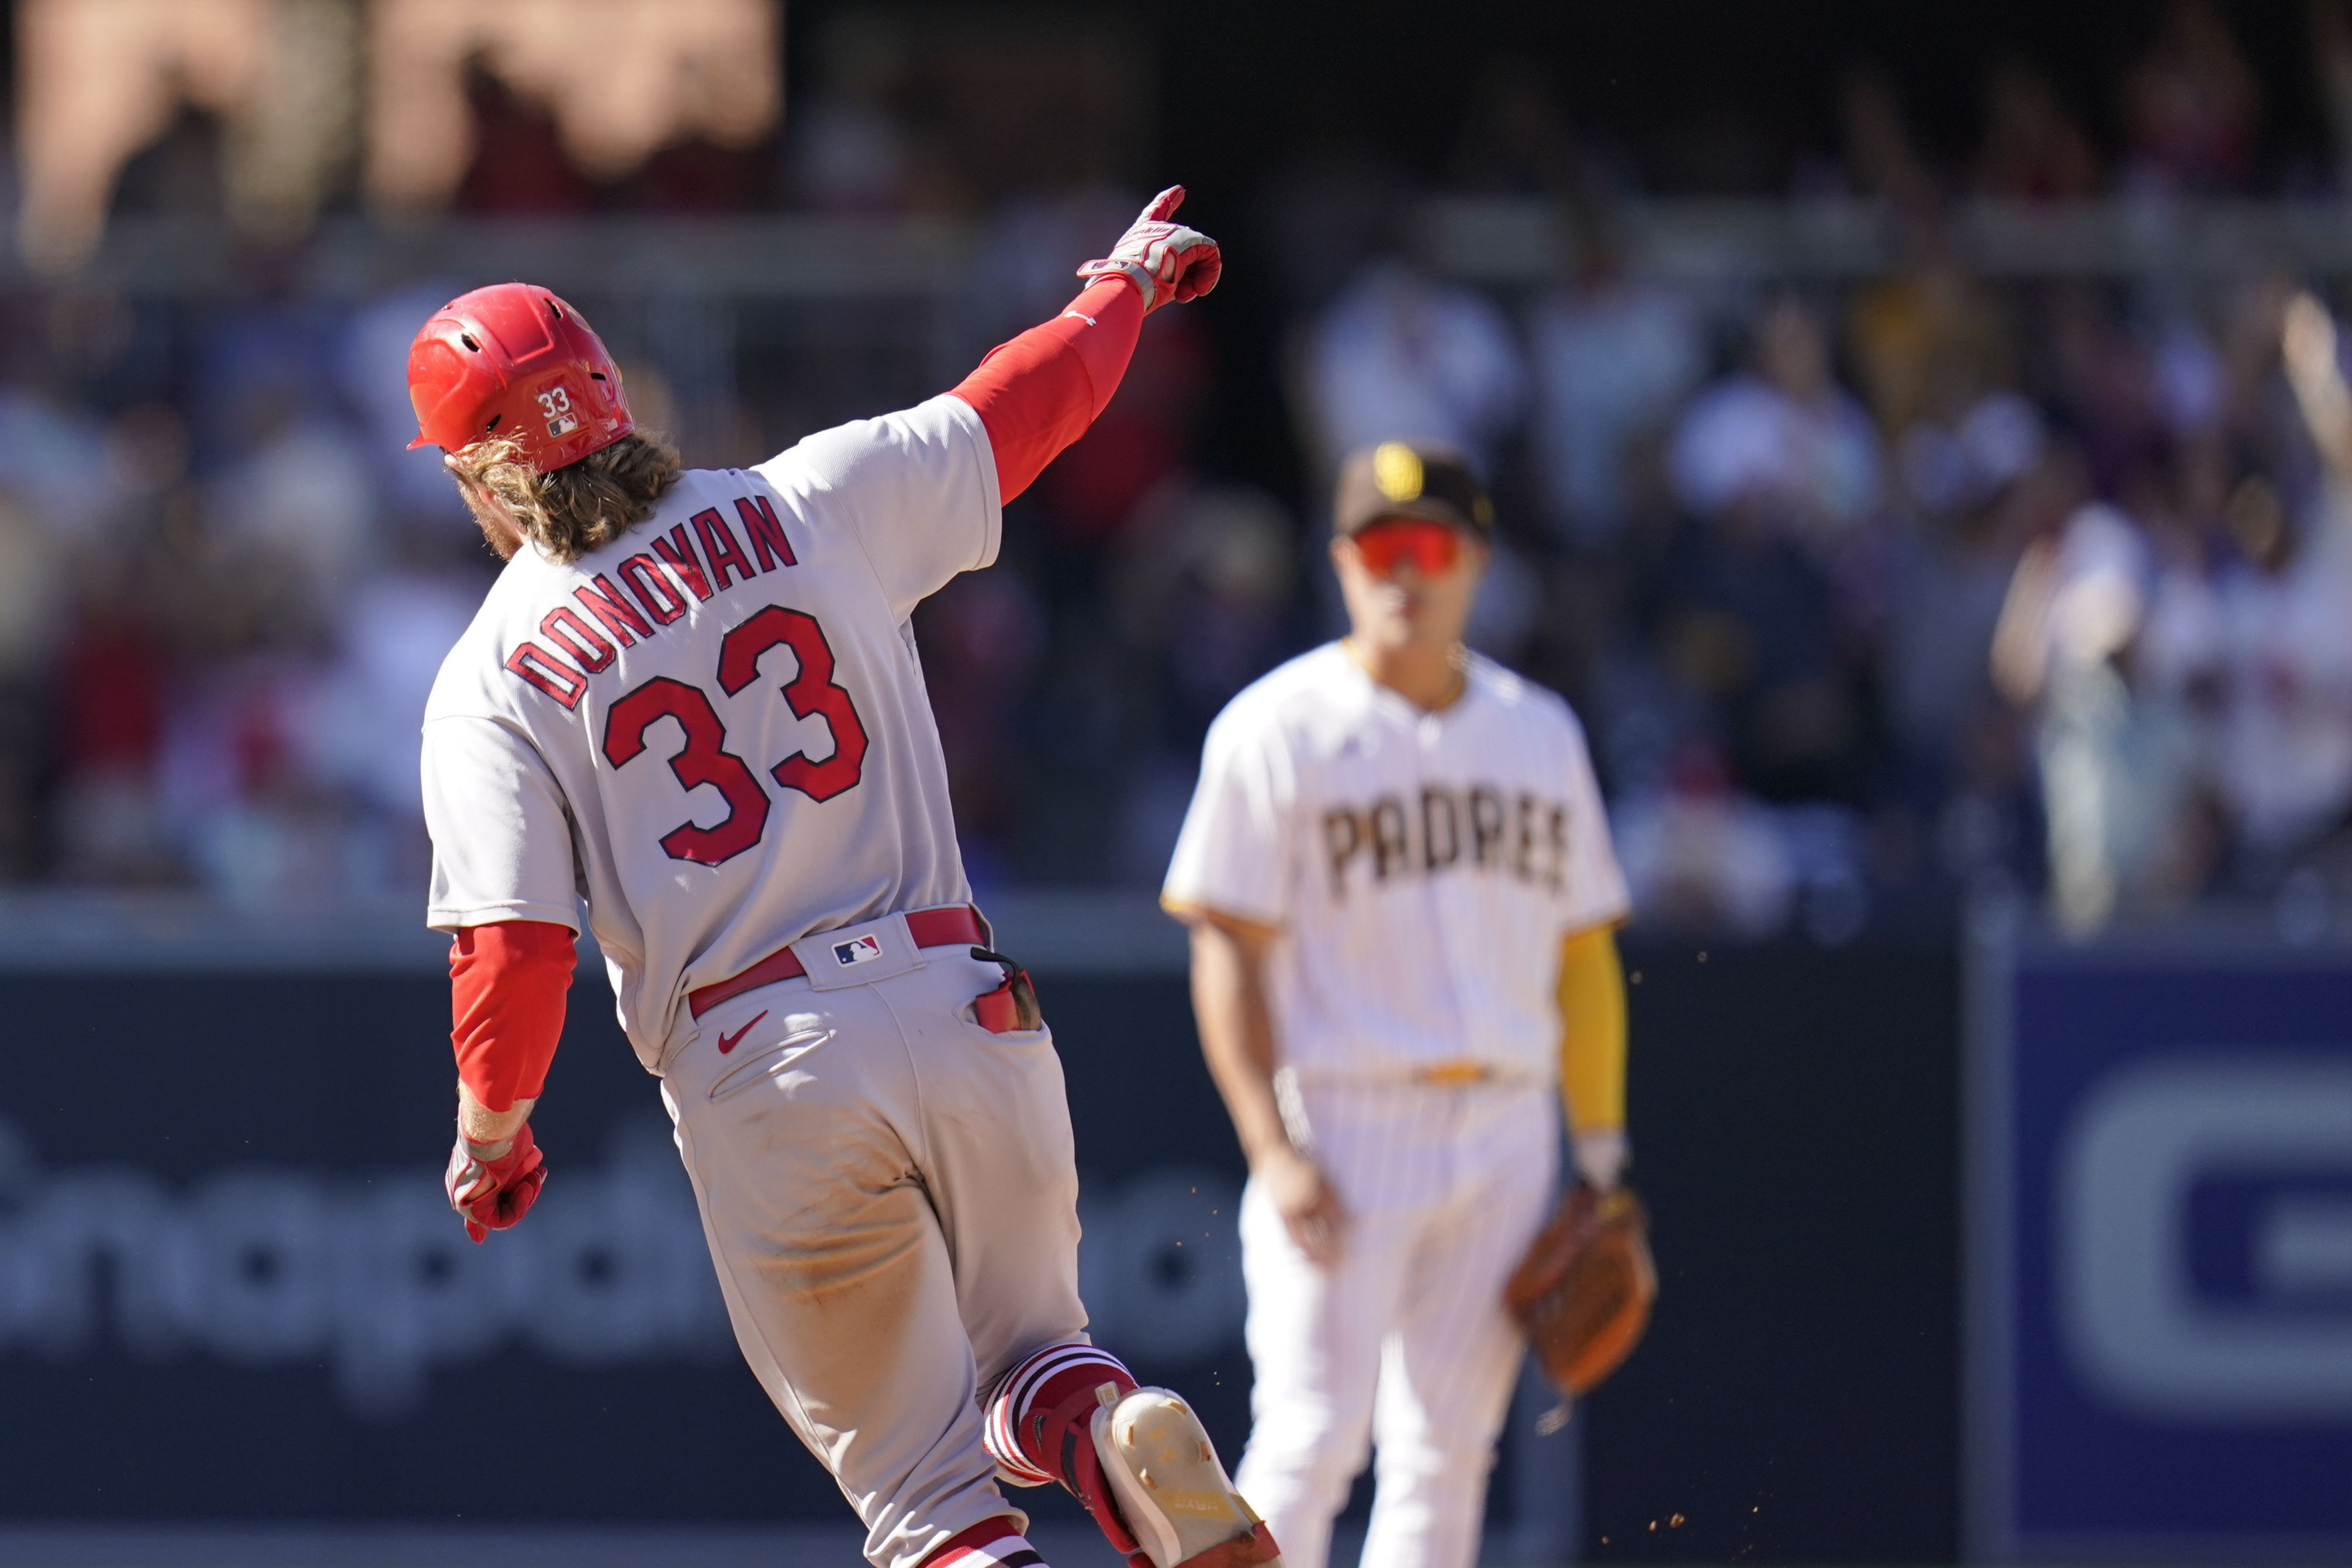 Donovan's grand slam carries Cardinals over Padres